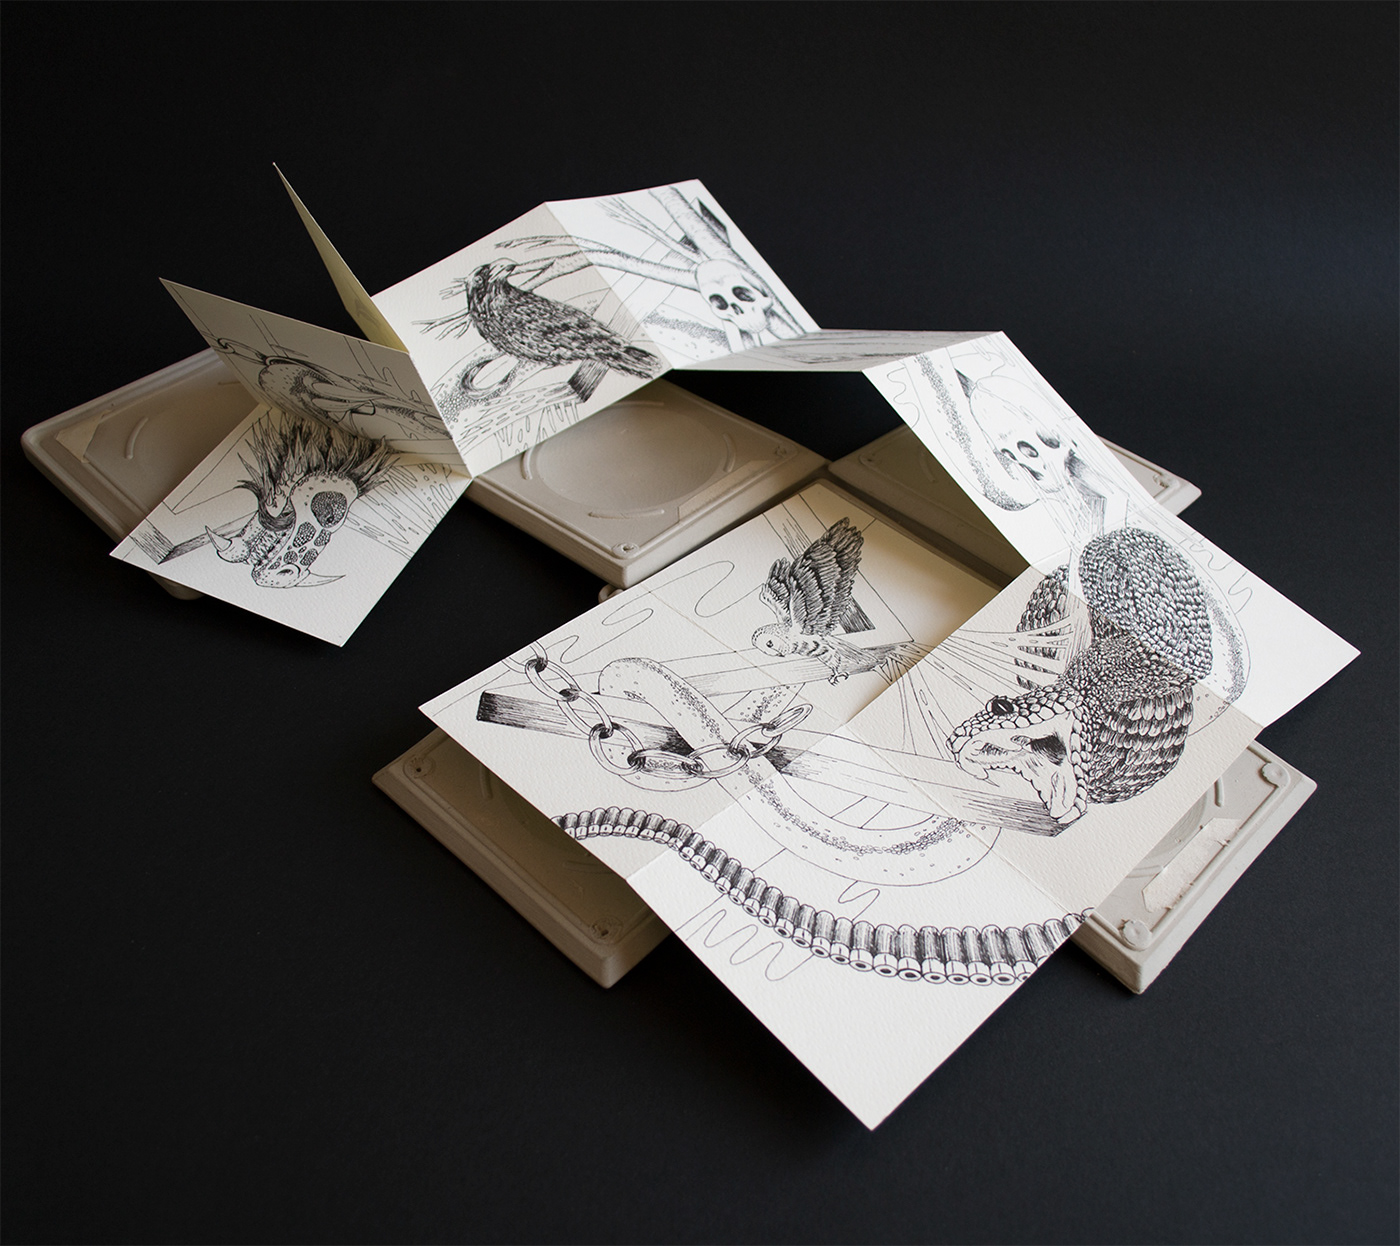 Caja pandora Guerra ilustracion dibujo ceramica ceramic libro de artista